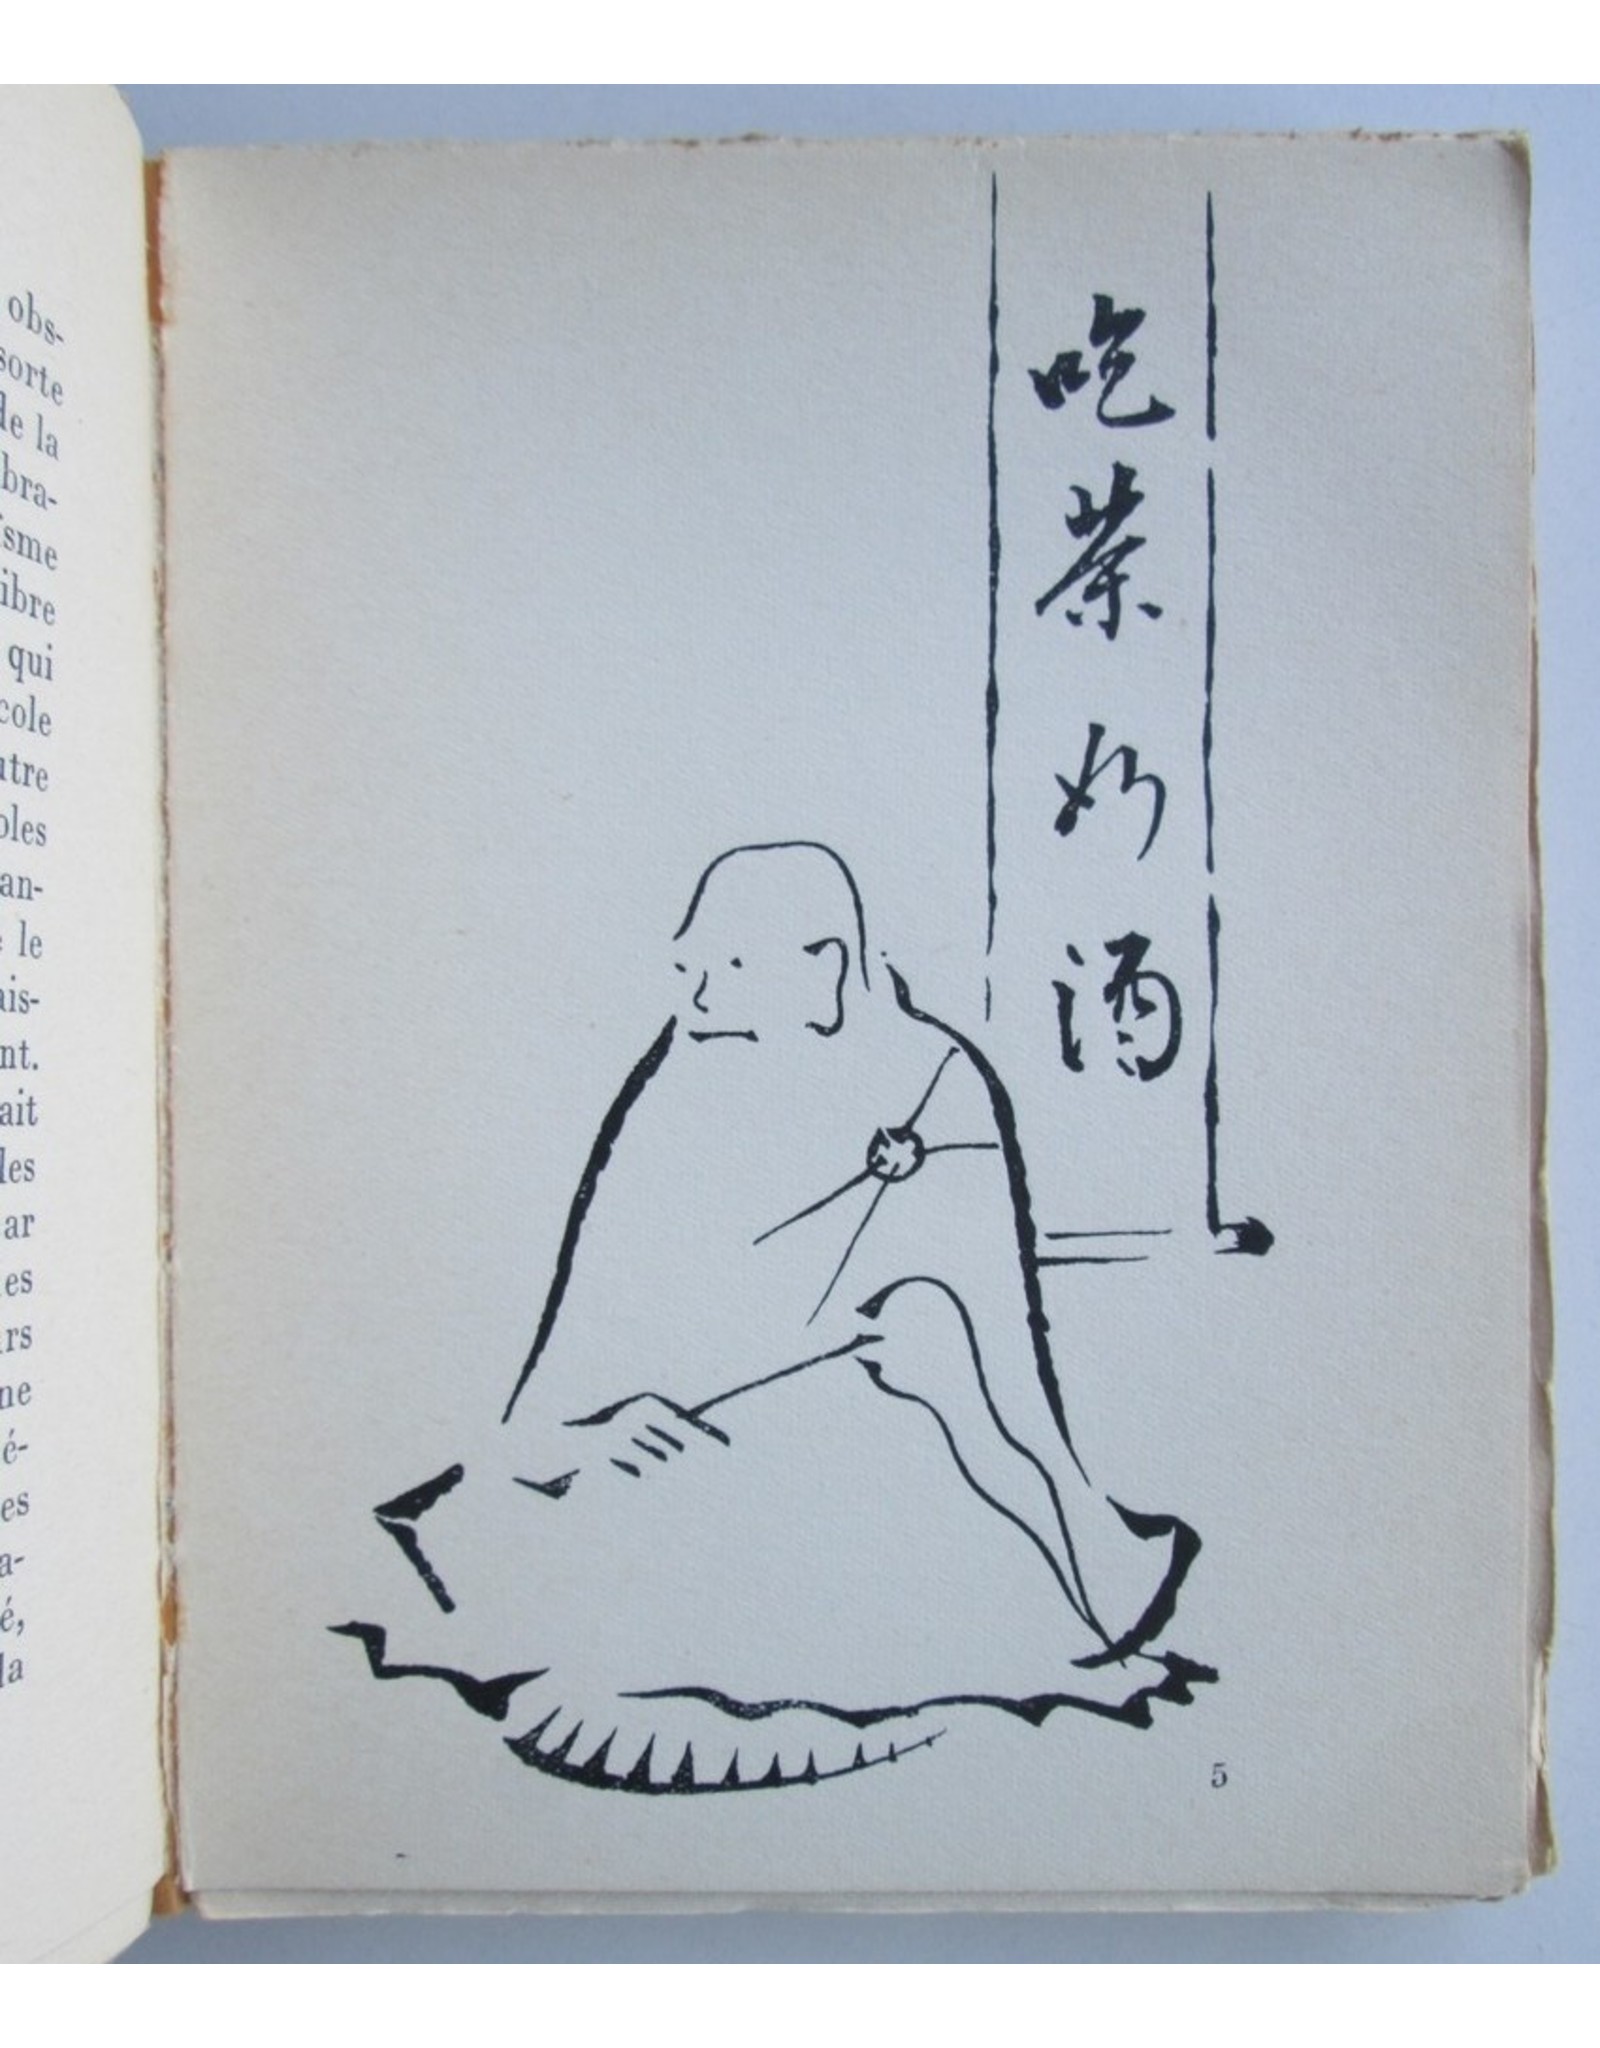 Okakura Kakuro - Le livre du thé. Traduit de l'anglais [...]. Illustrations de Loka Hasegawa